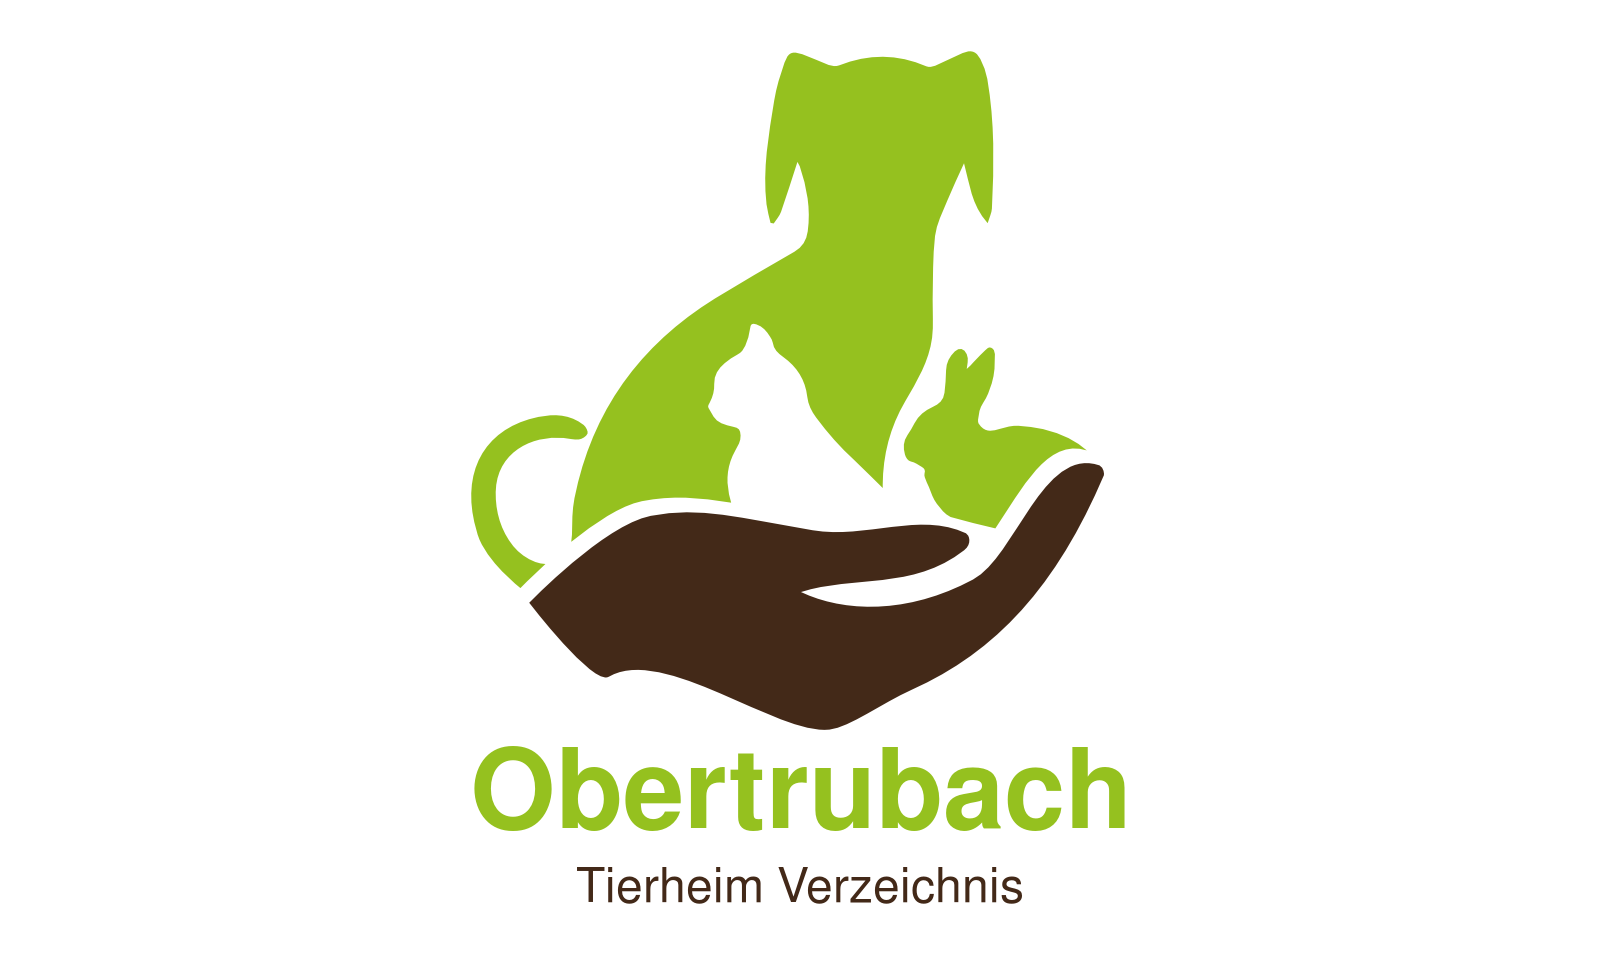 Tierheim Obertrubach